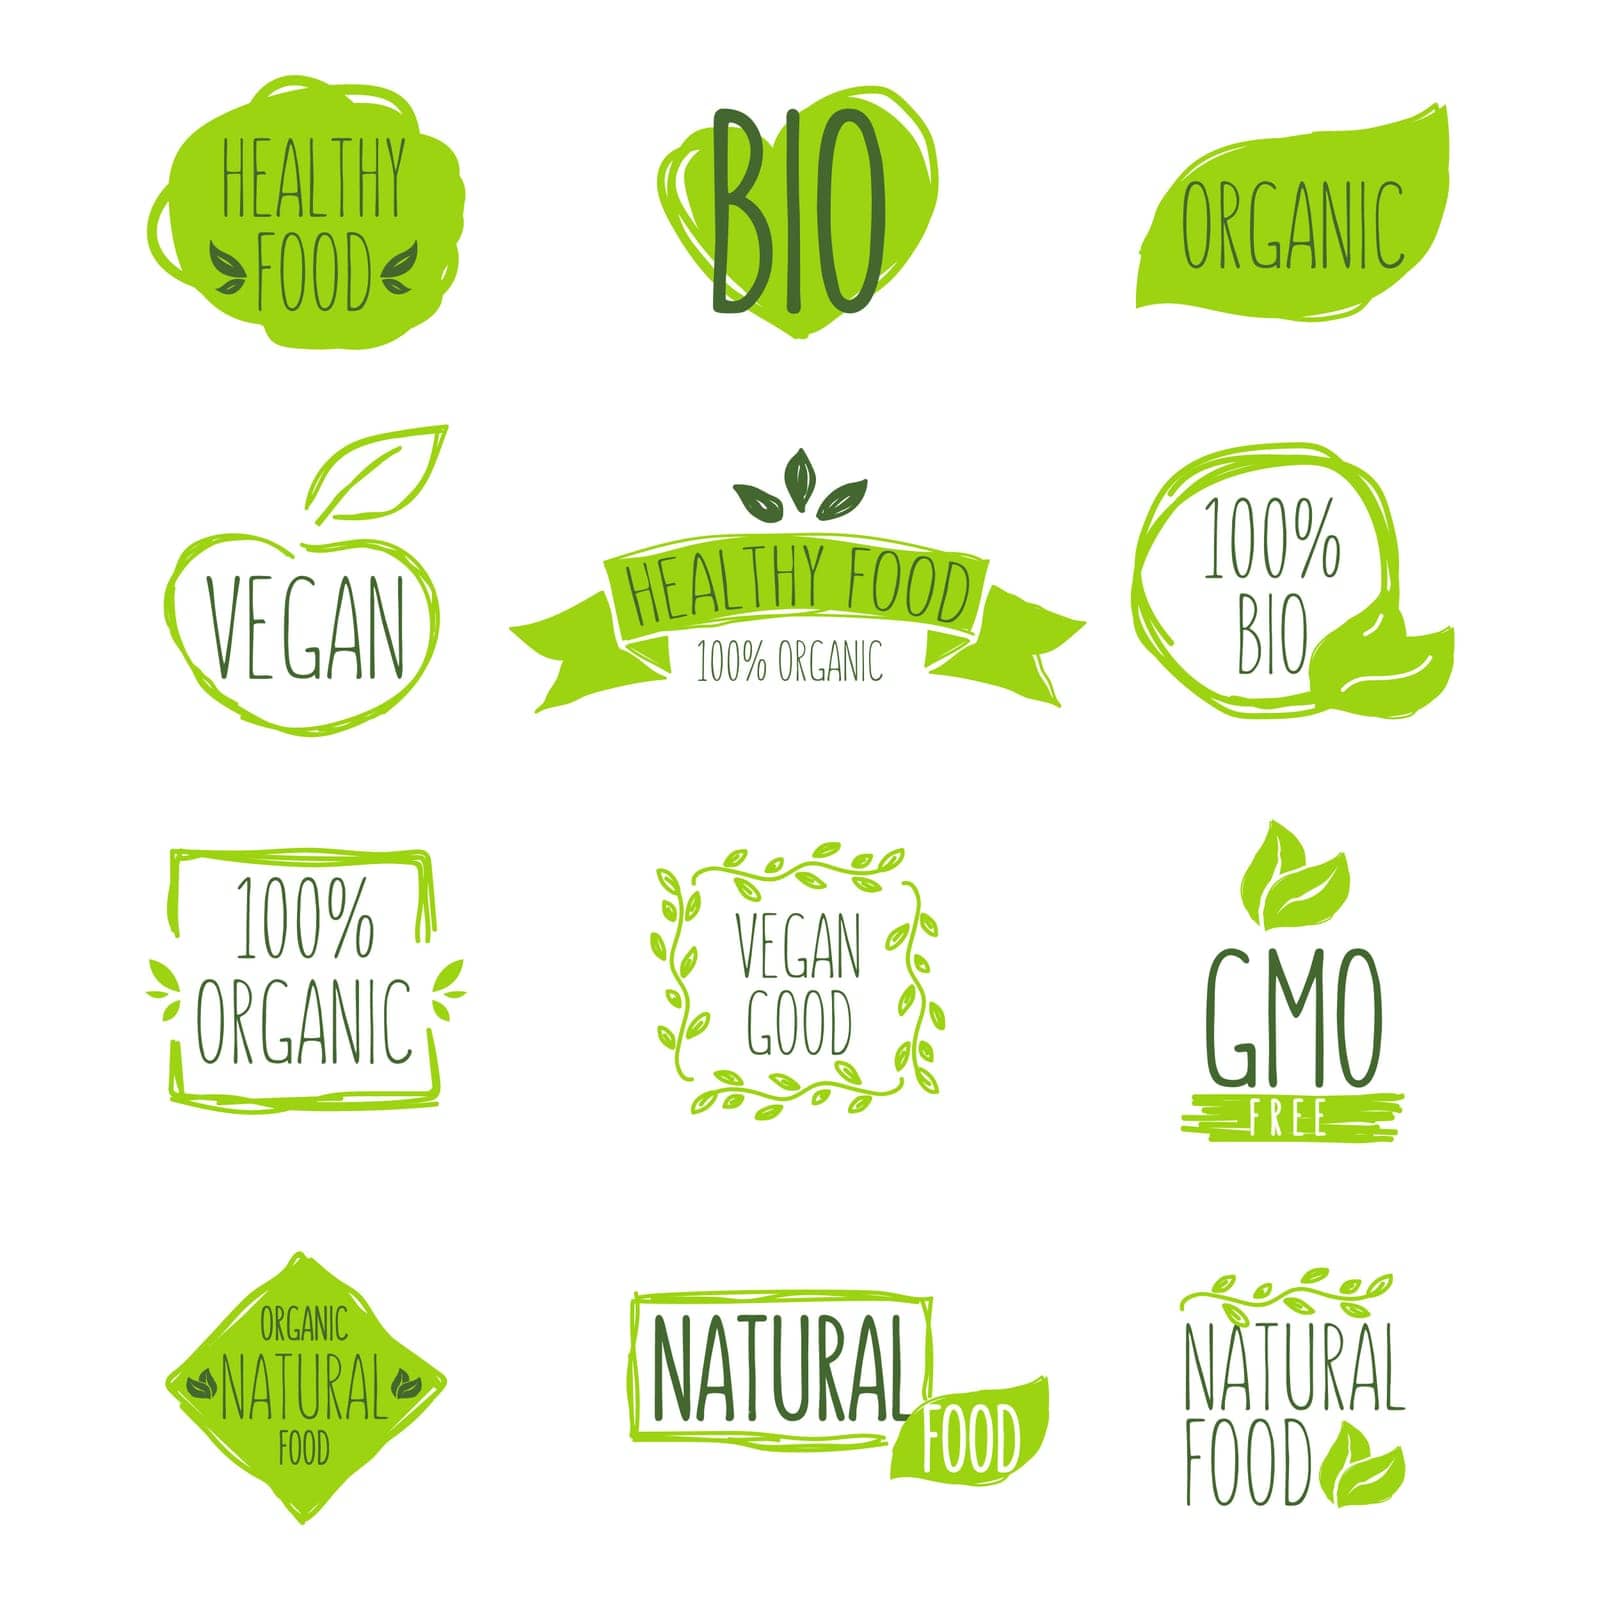 Organic product emblem set. Green eco mark, fresh vegetarian food stamp. Vector illustrations for healthy eating, lifestyle, natural ingredient concept